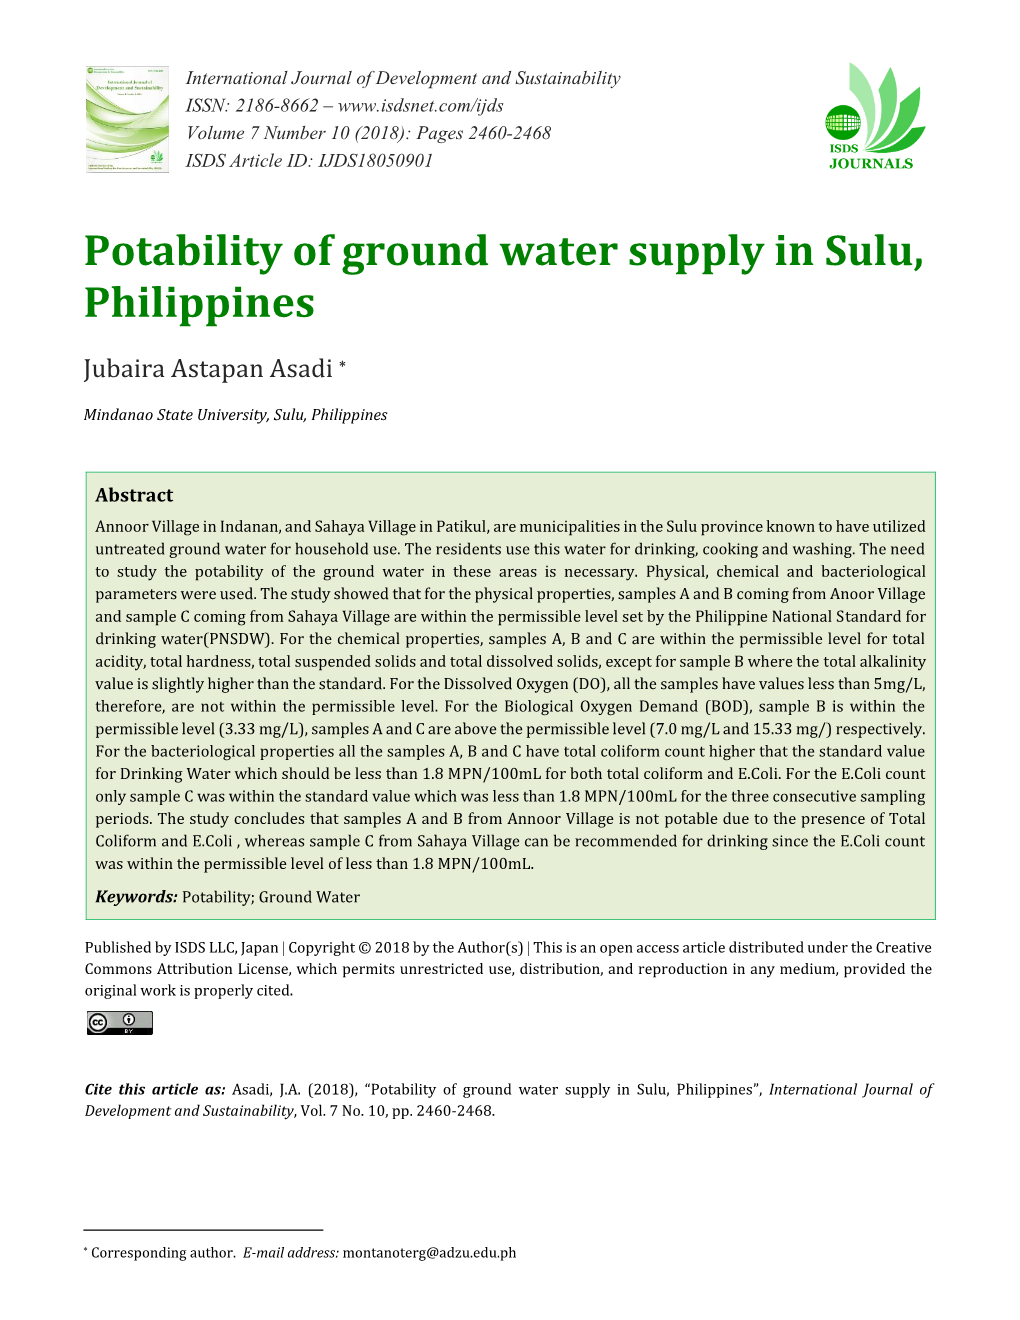 Potability of Ground Water Supply in Sulu, Philippines